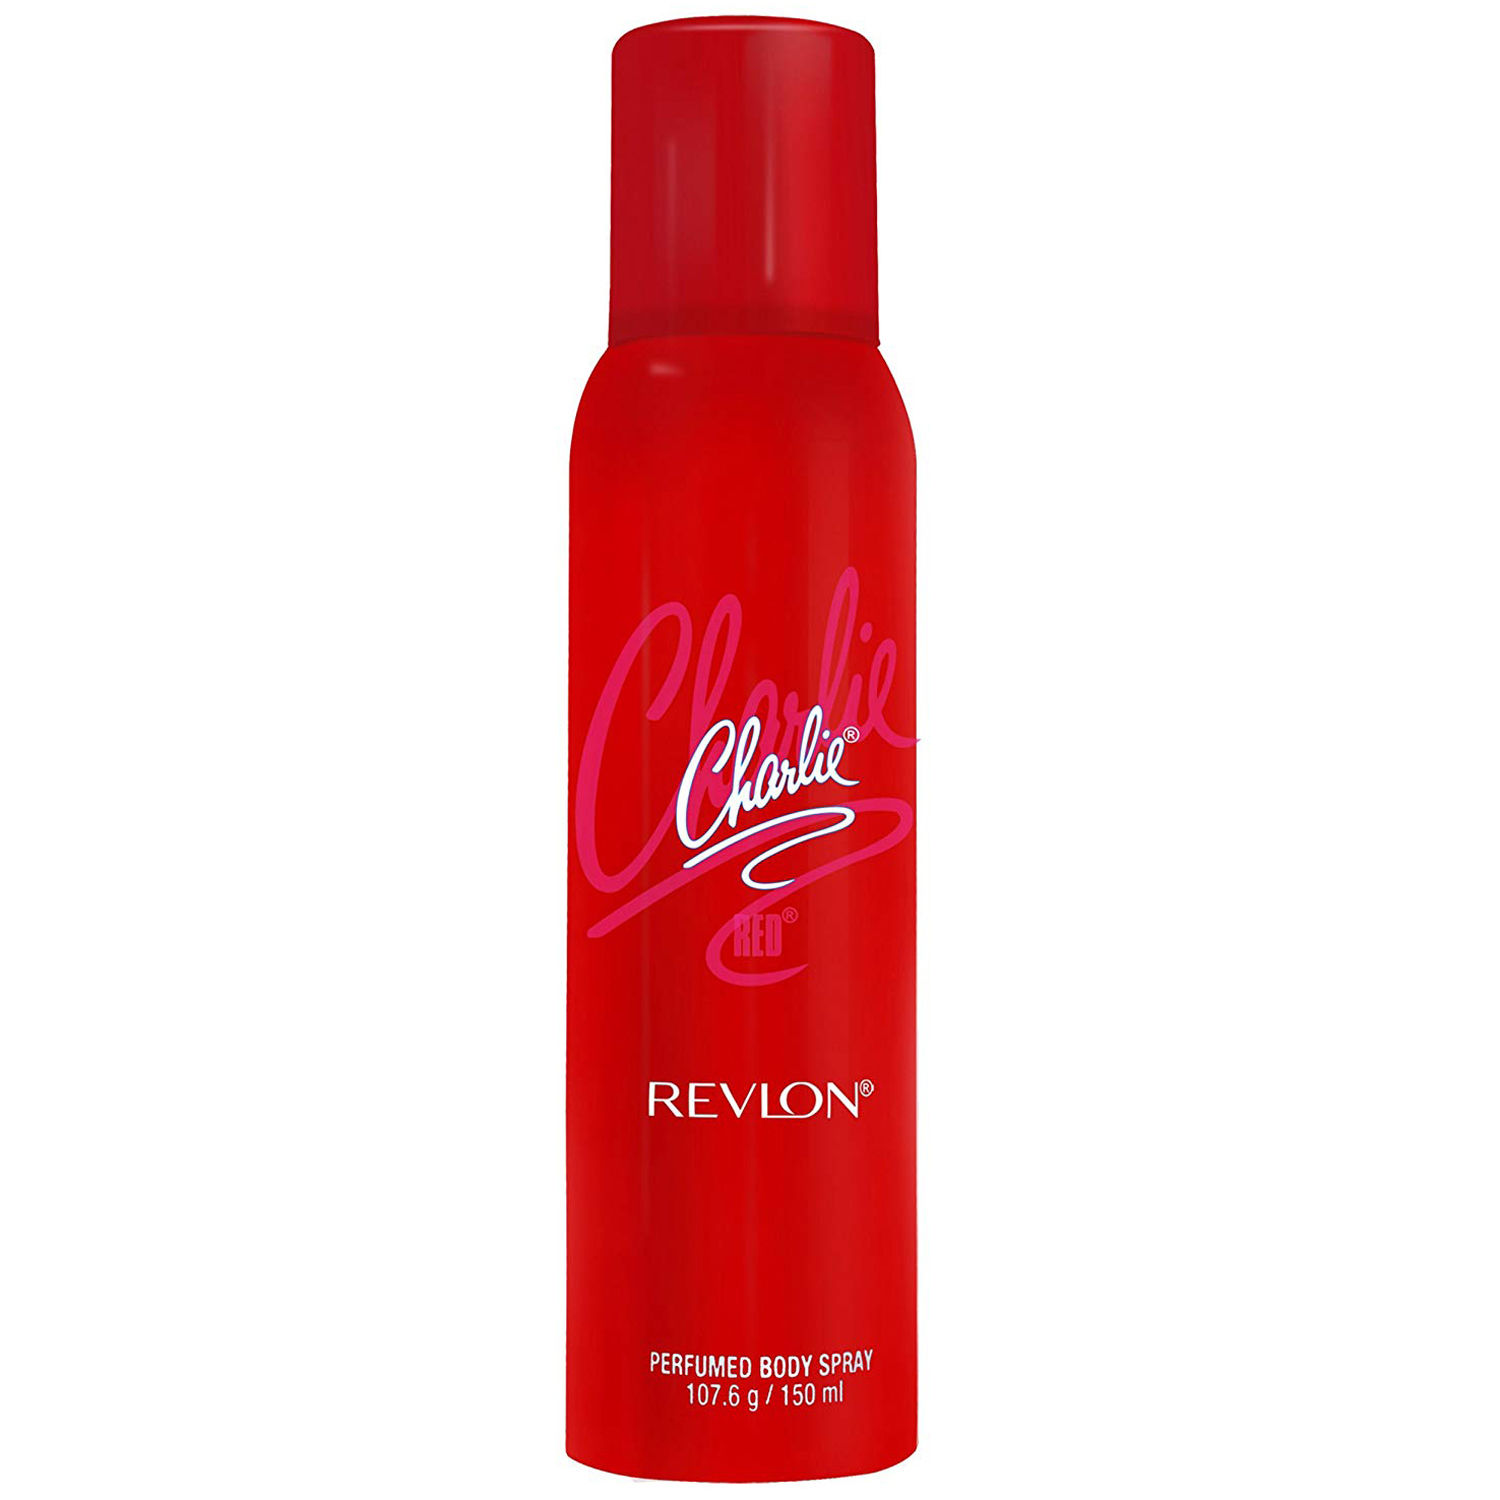 Revlon Charlie Red Perfumed Body Spary, 150 ml, Pack of 1 